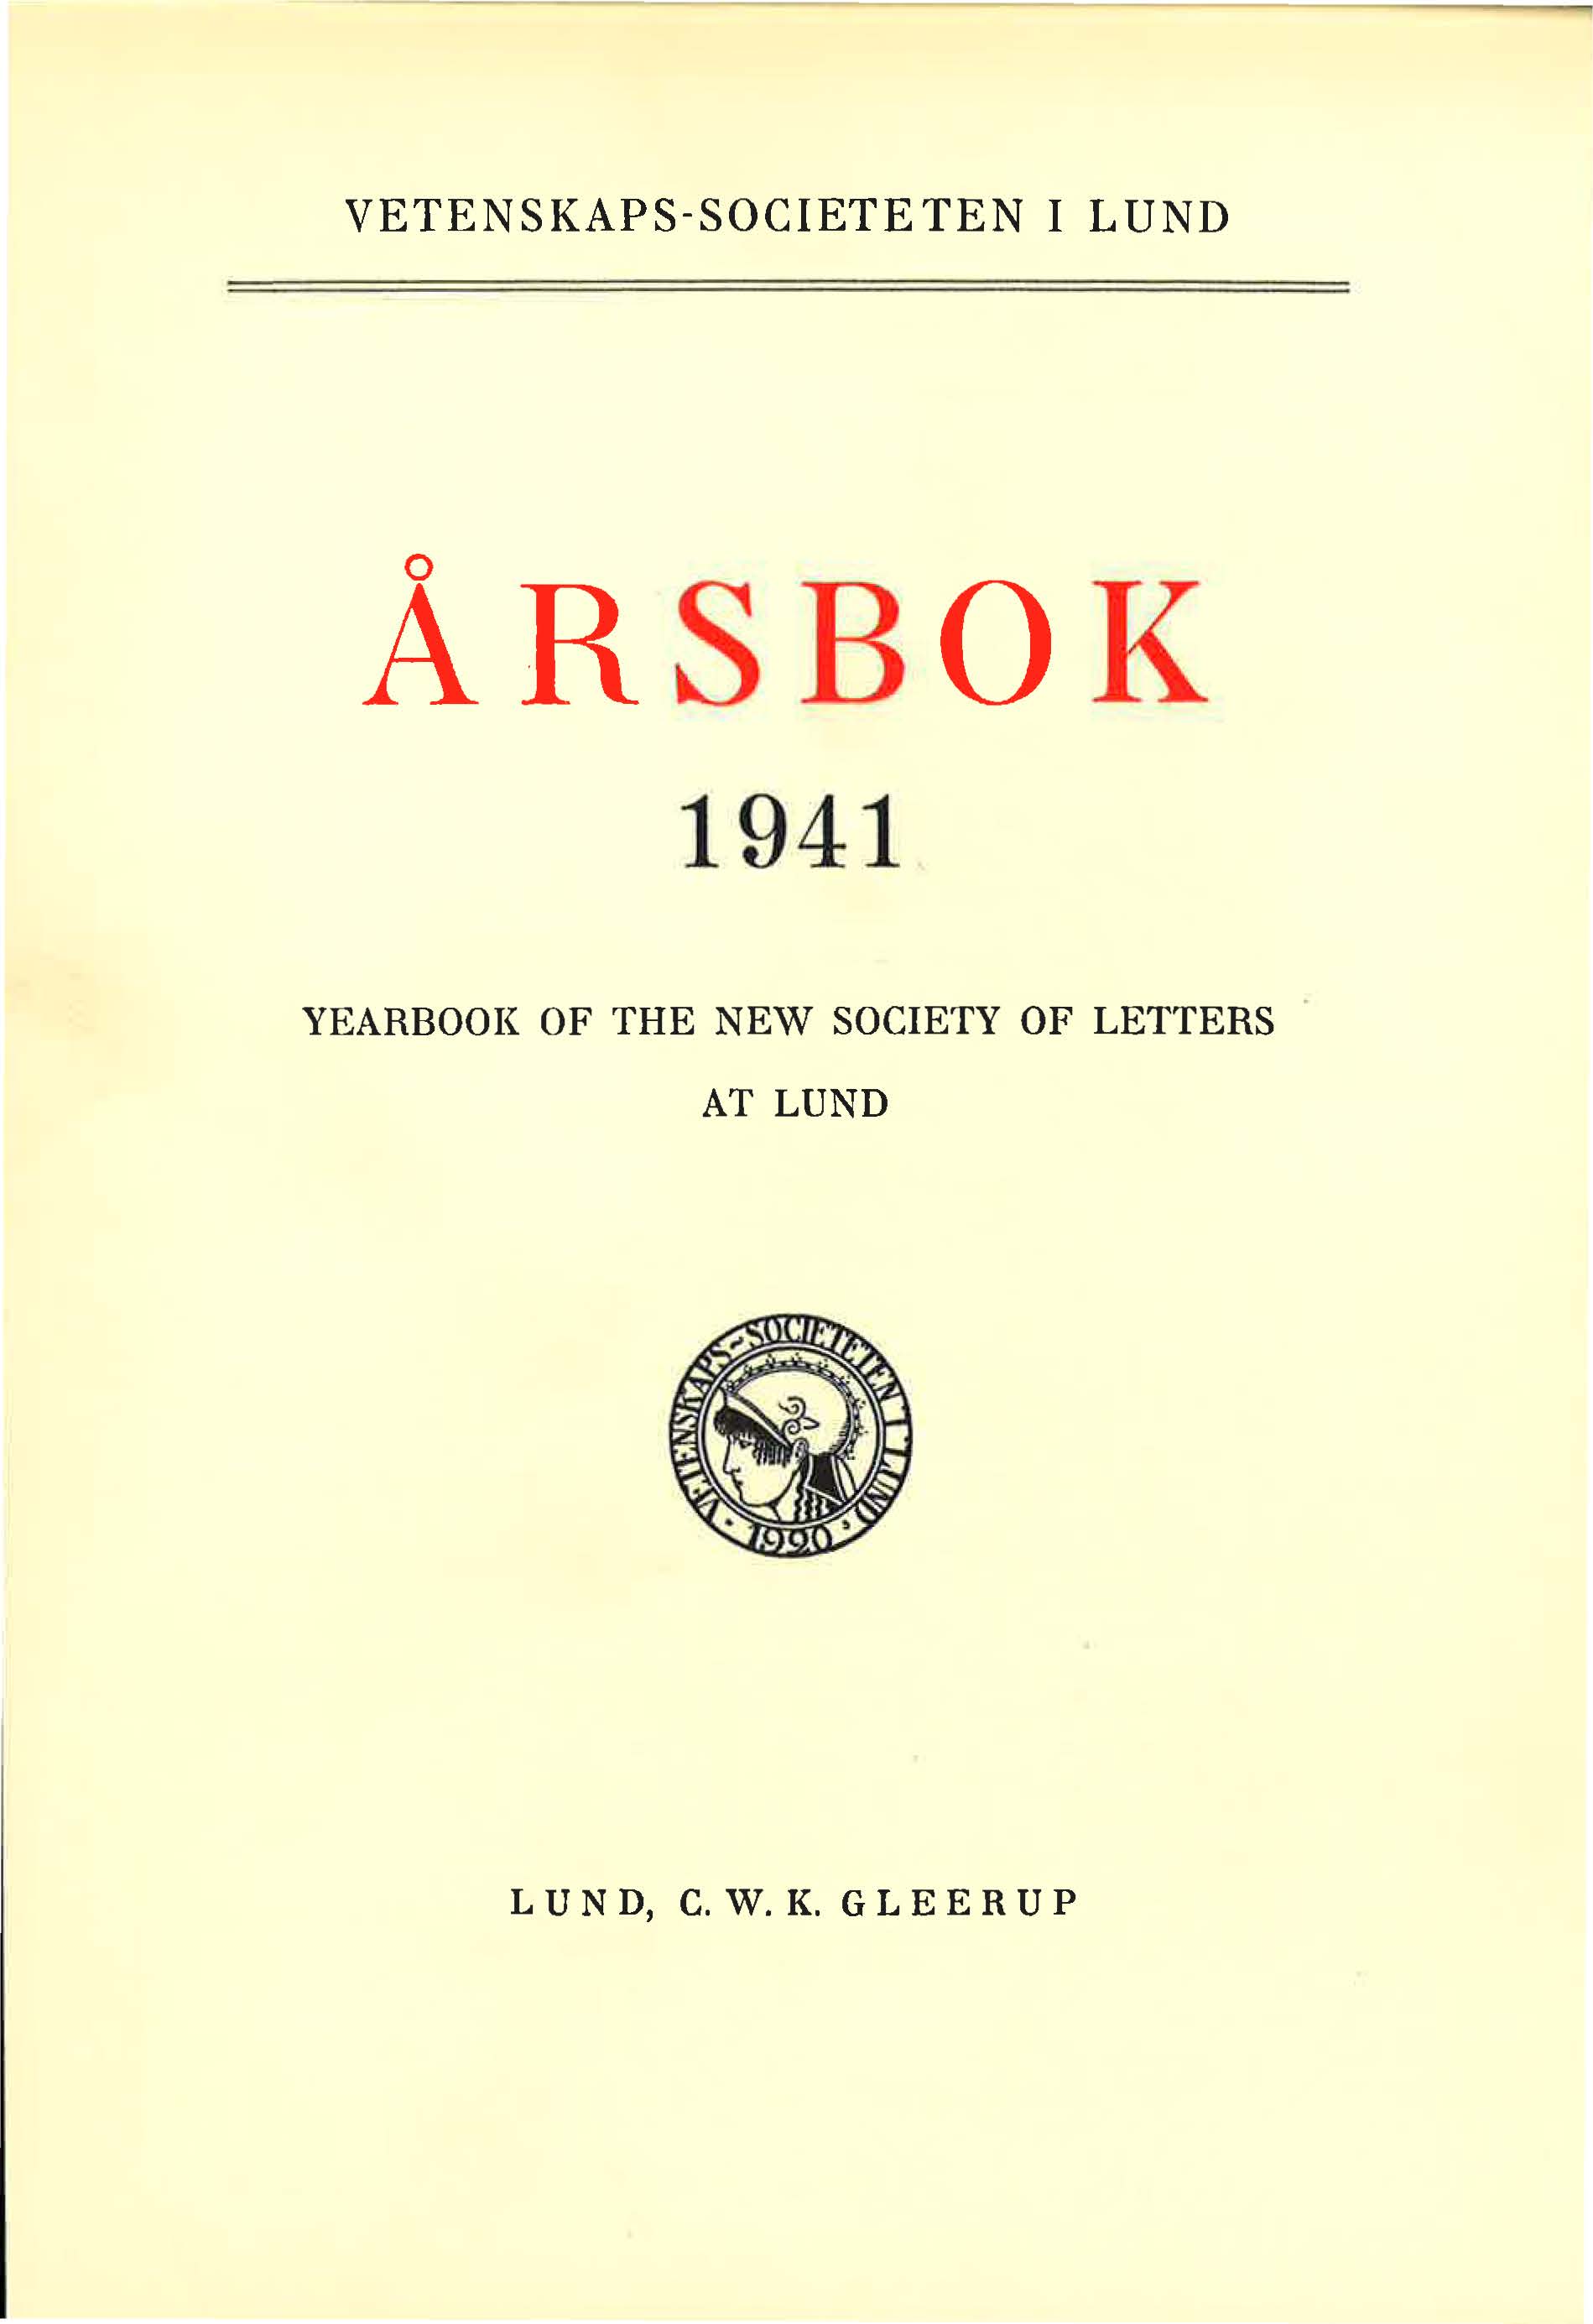 					Visa Årsbok 1941
				